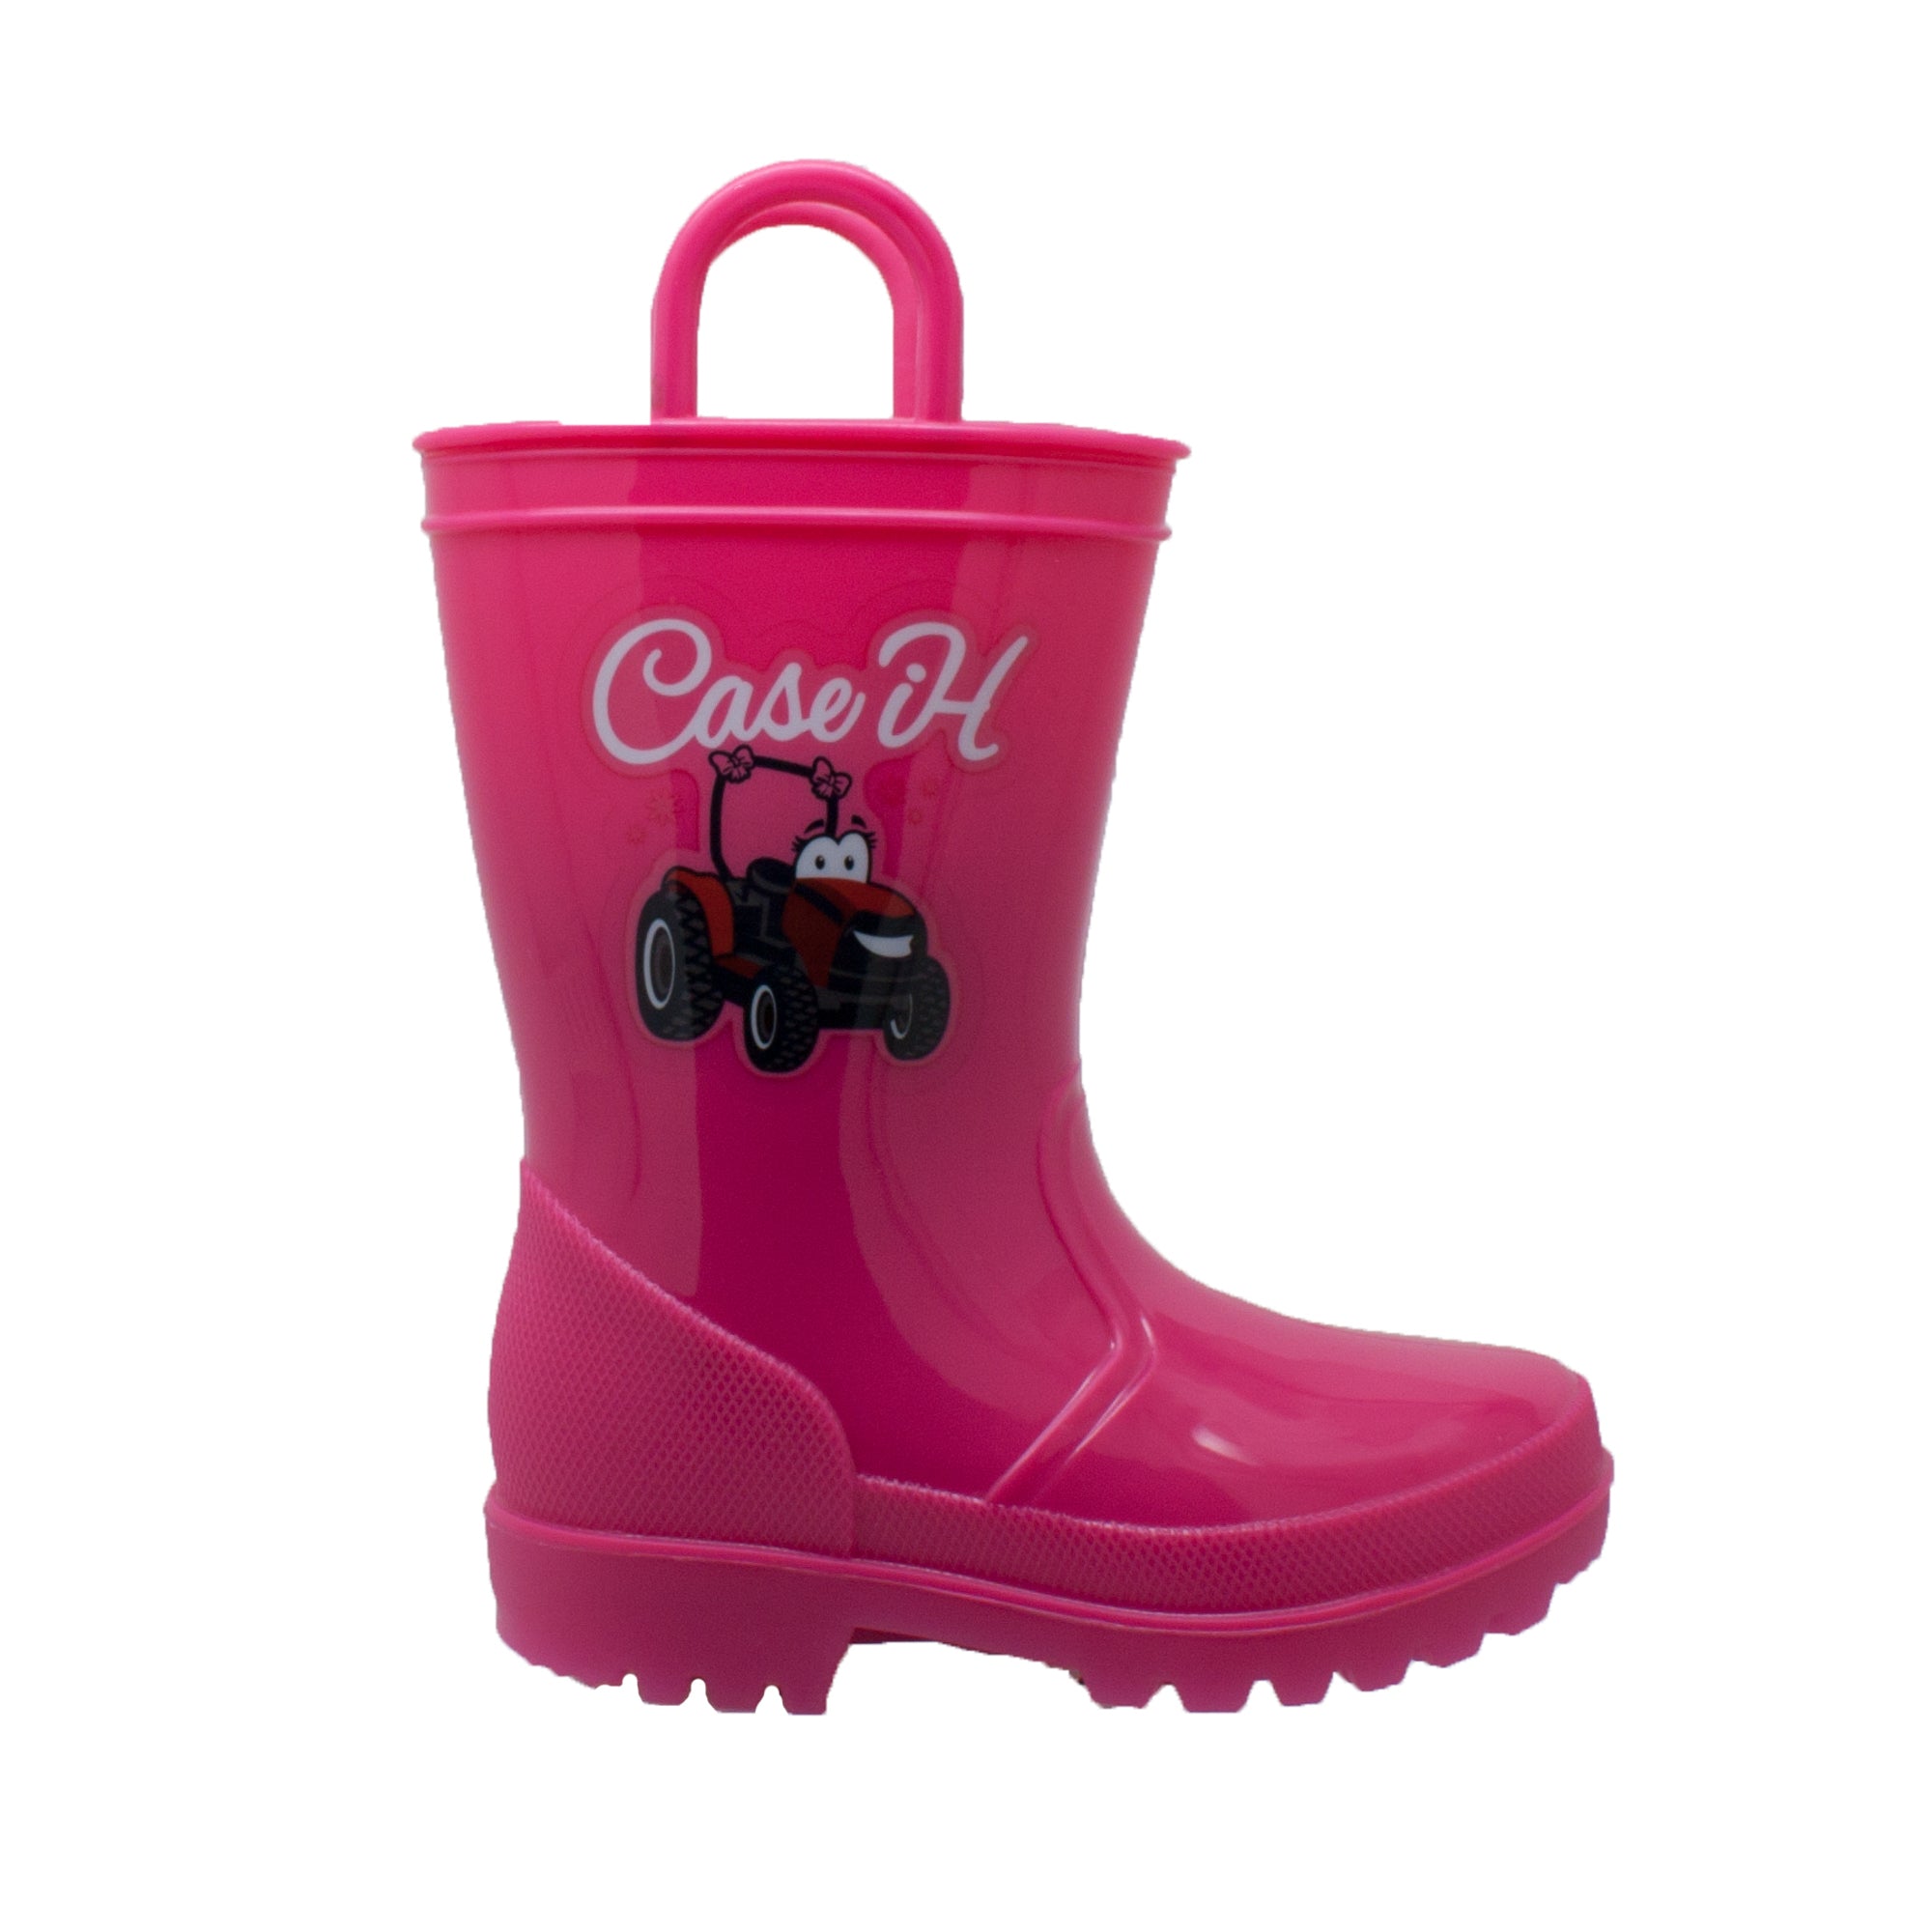 kids pink work boots